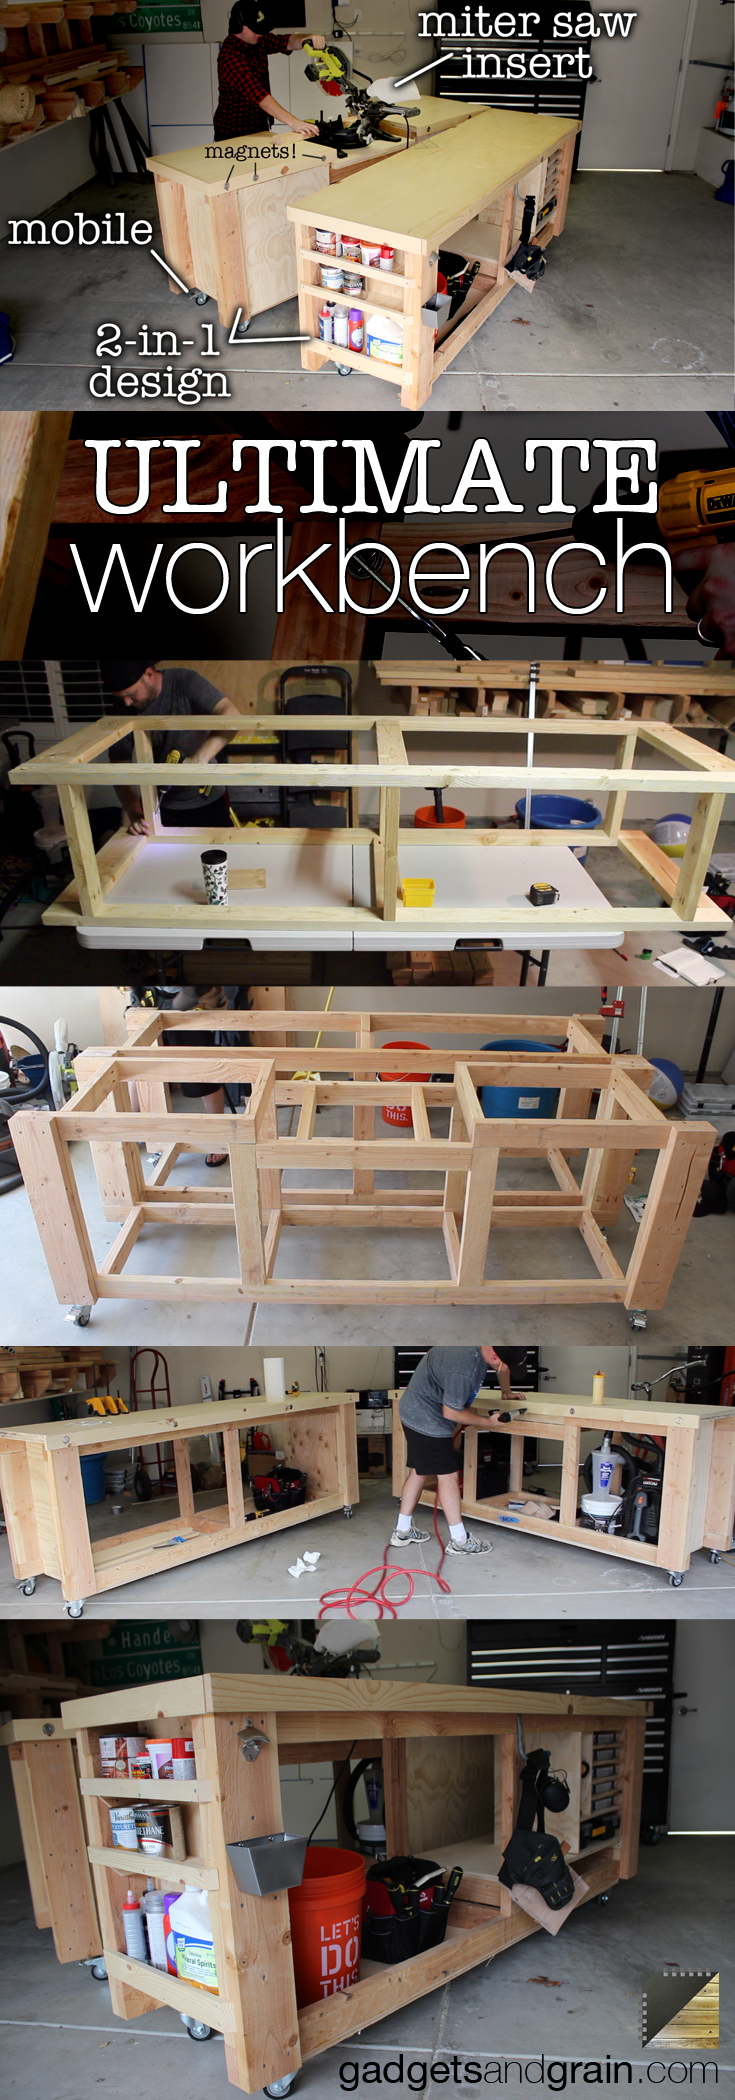 storyboard of DIY workbench build